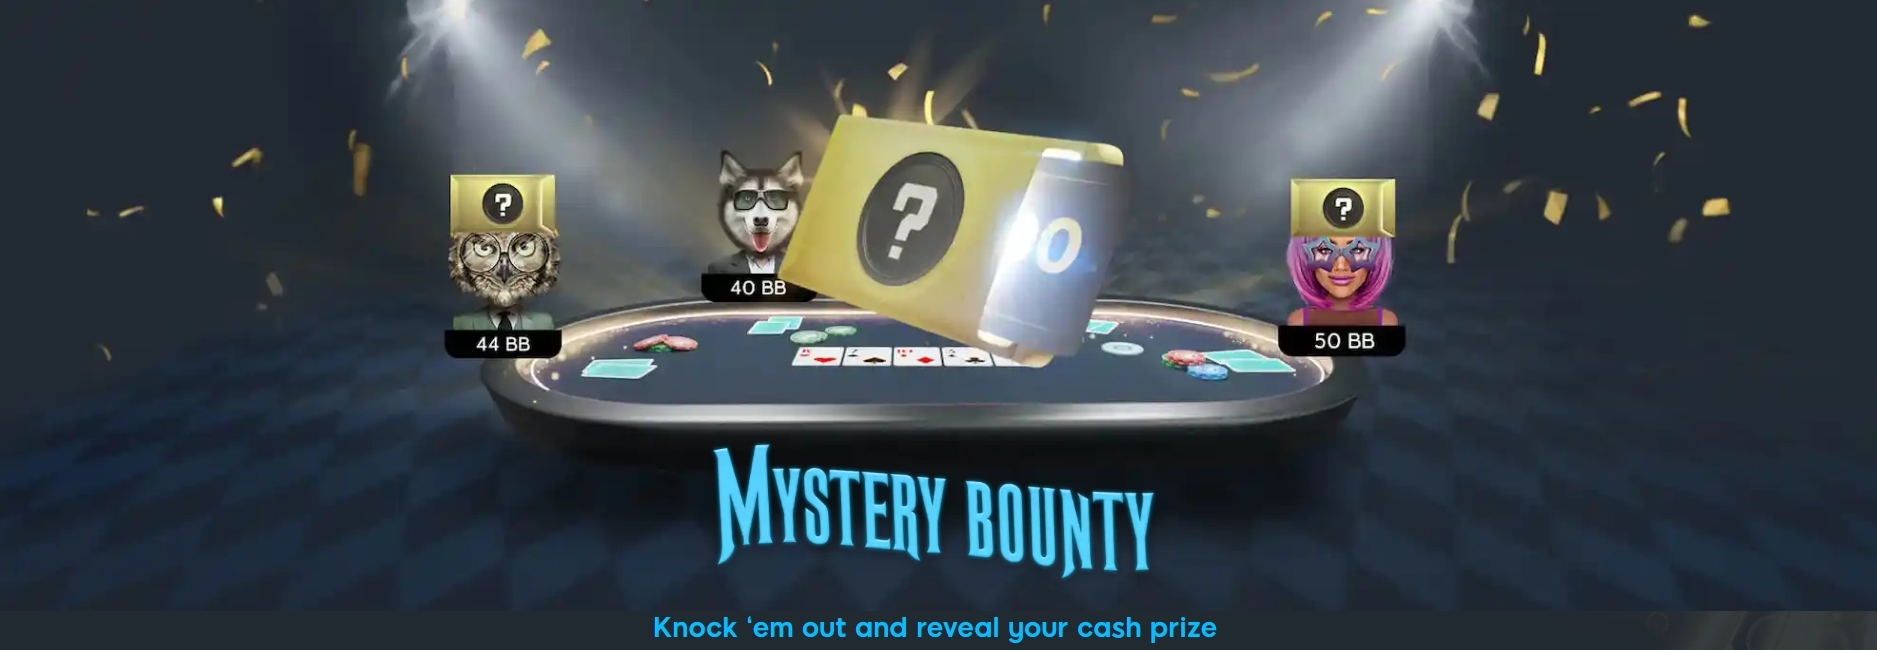 Mystery bounty tournaments